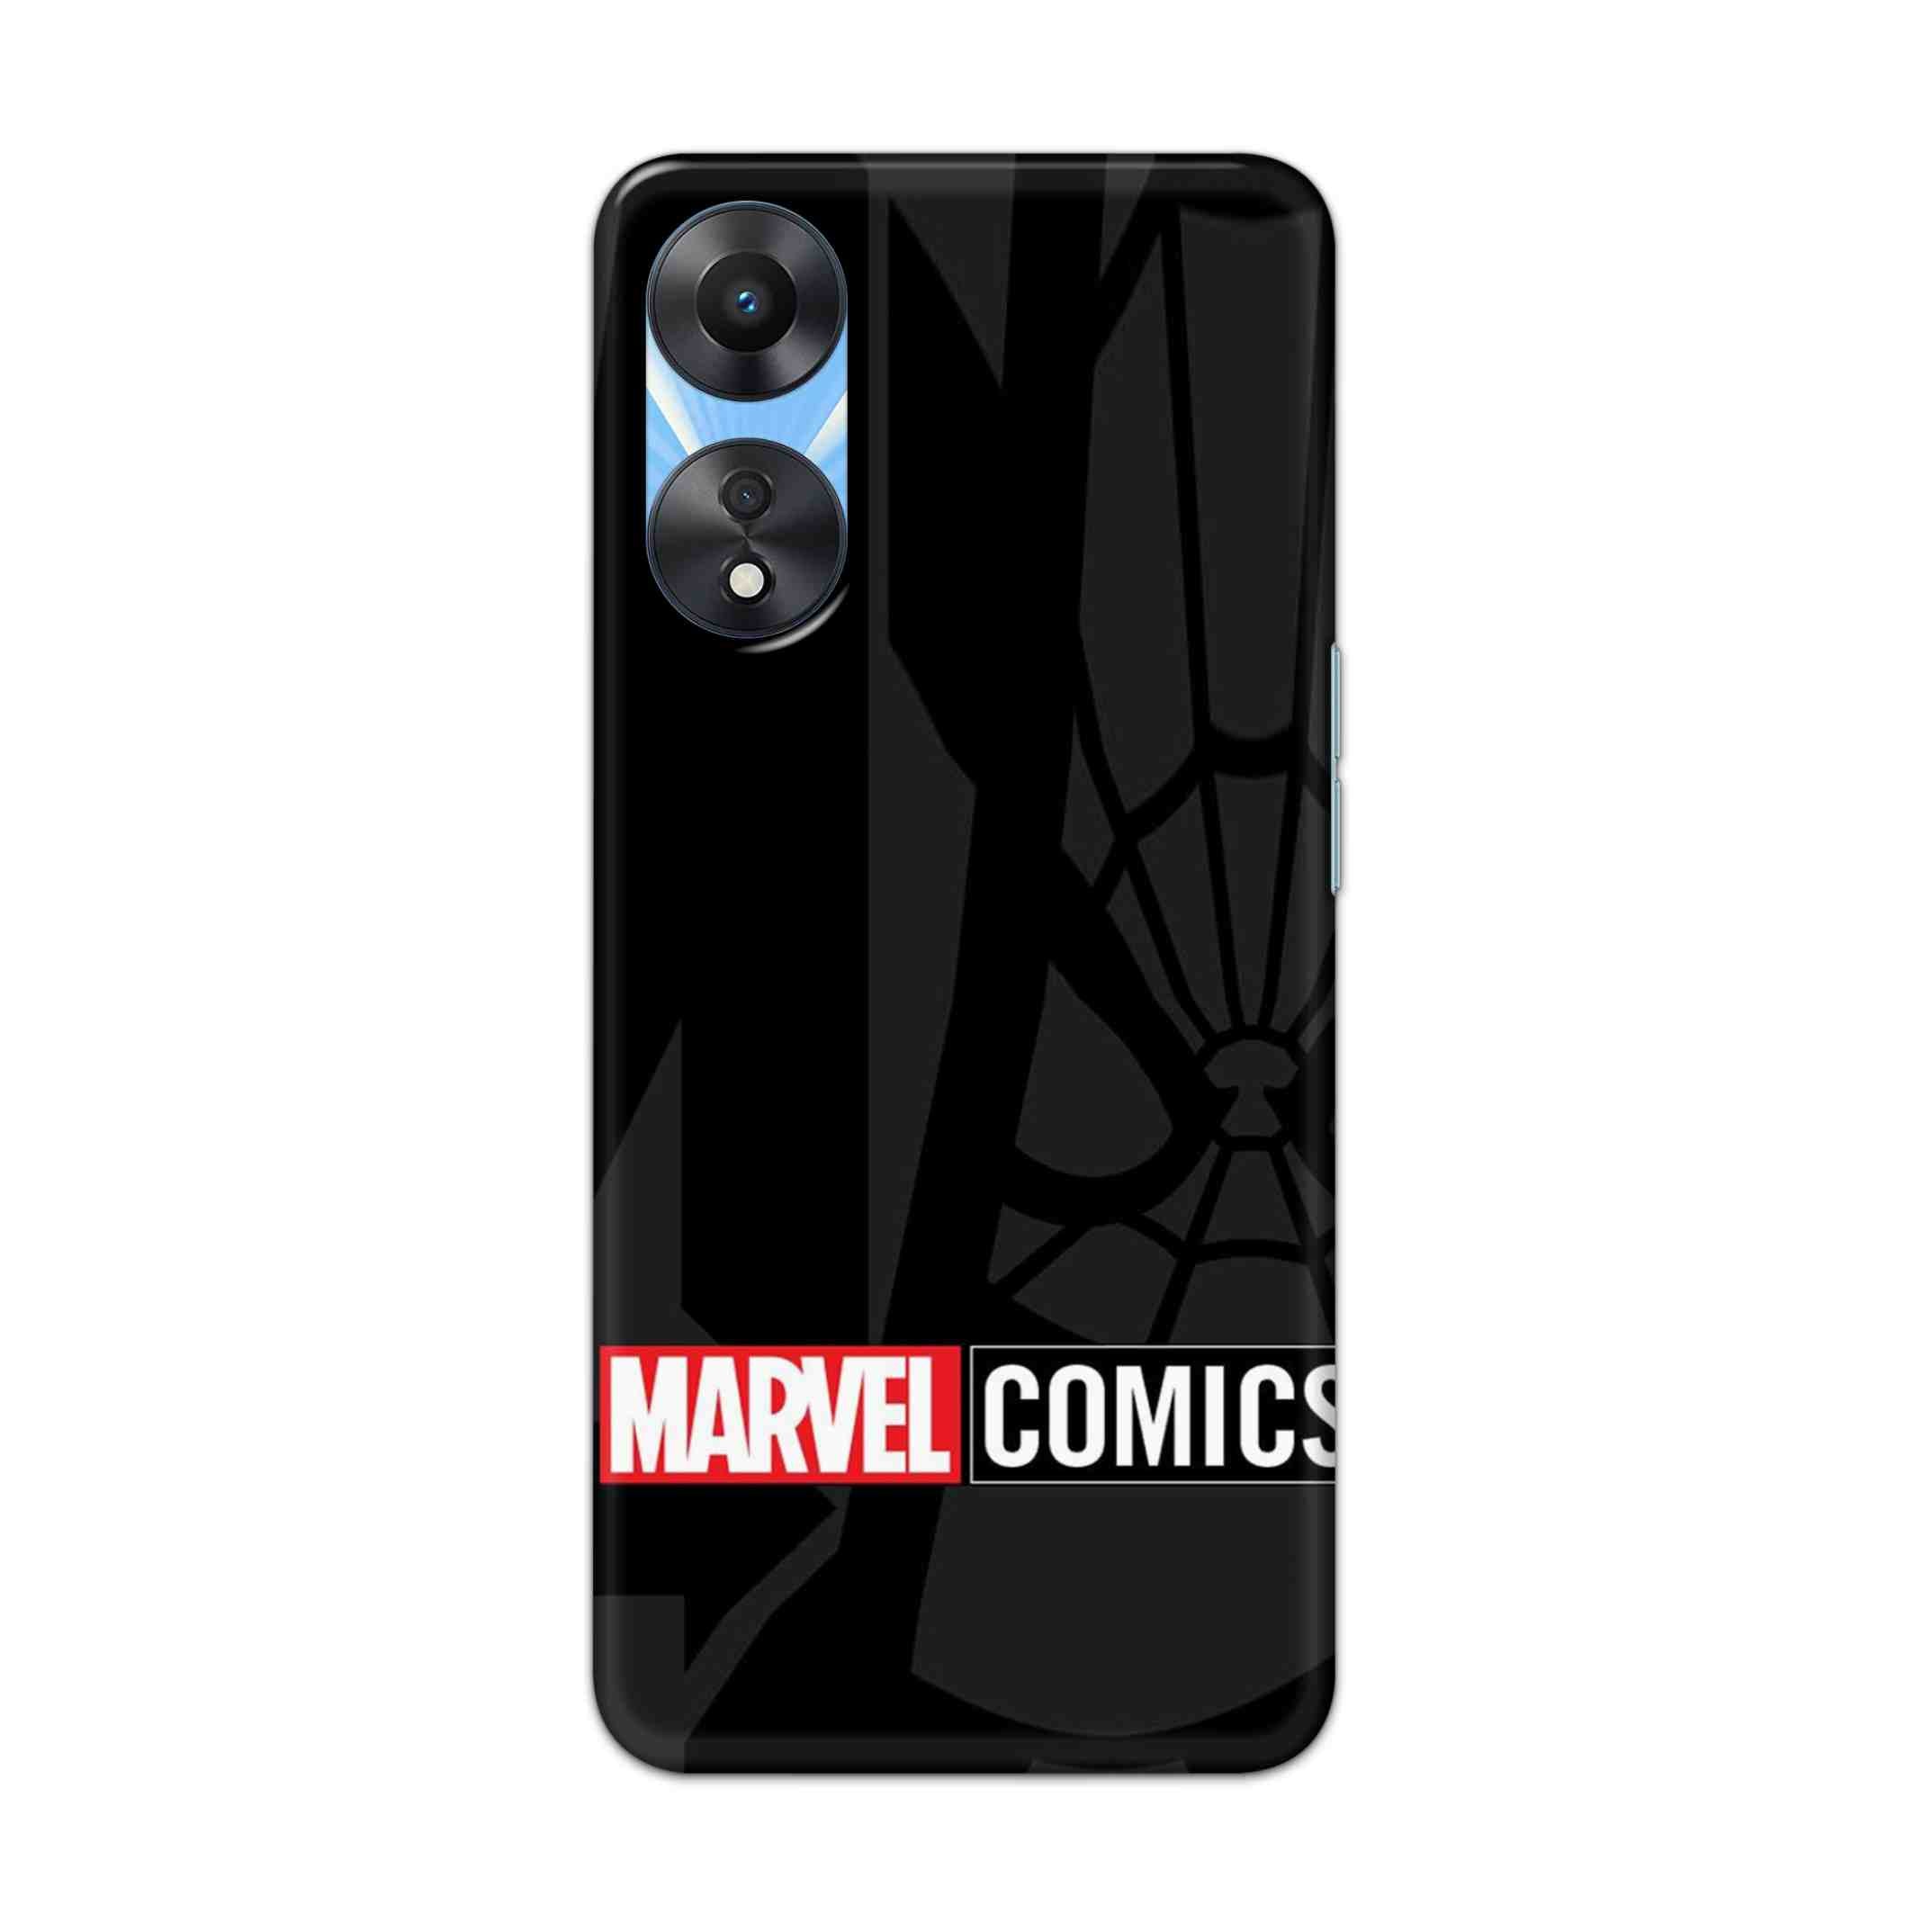 Buy Marvel Comics Hard Back Mobile Phone Case Cover For OPPO A78 Online